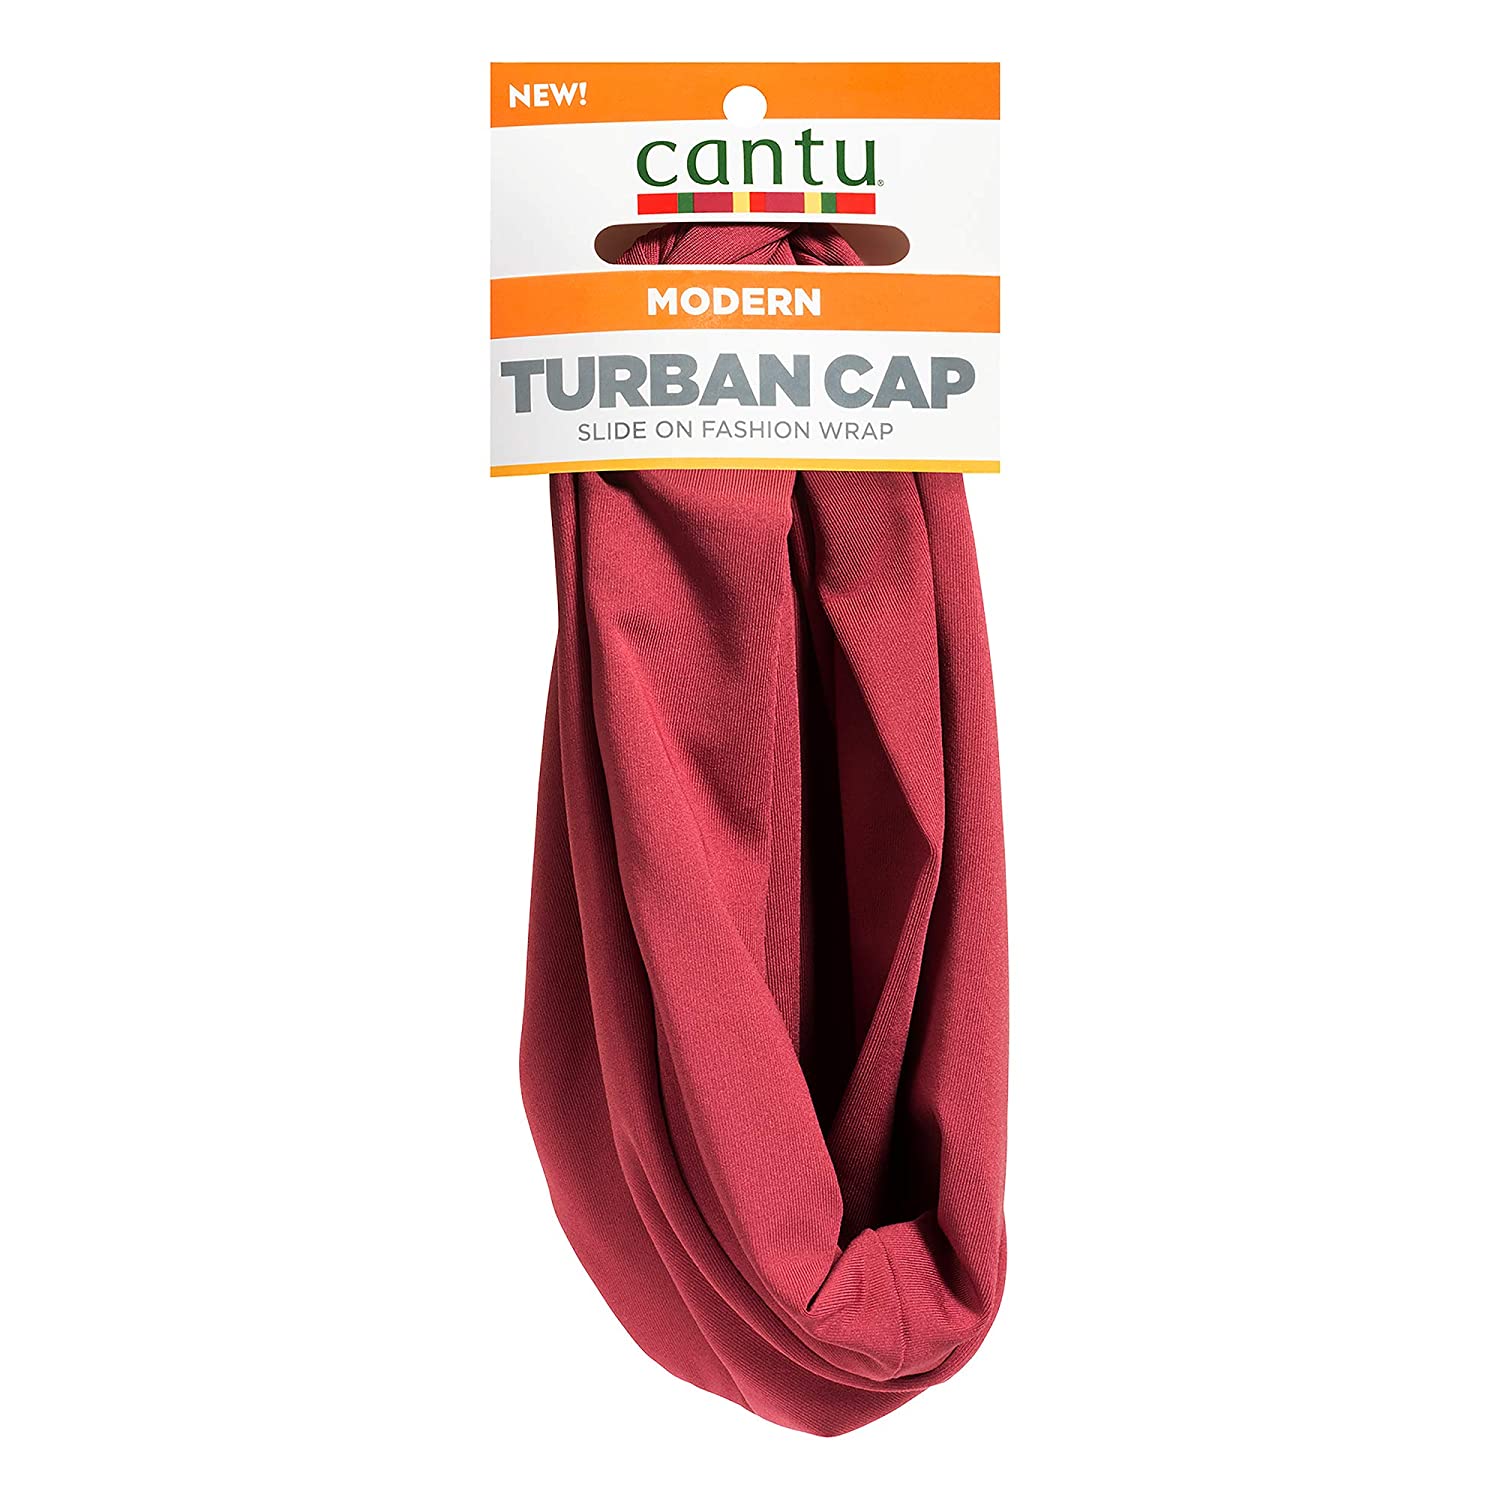 Cantu Accessories Modern Turban Cap Slide on Fashion Band